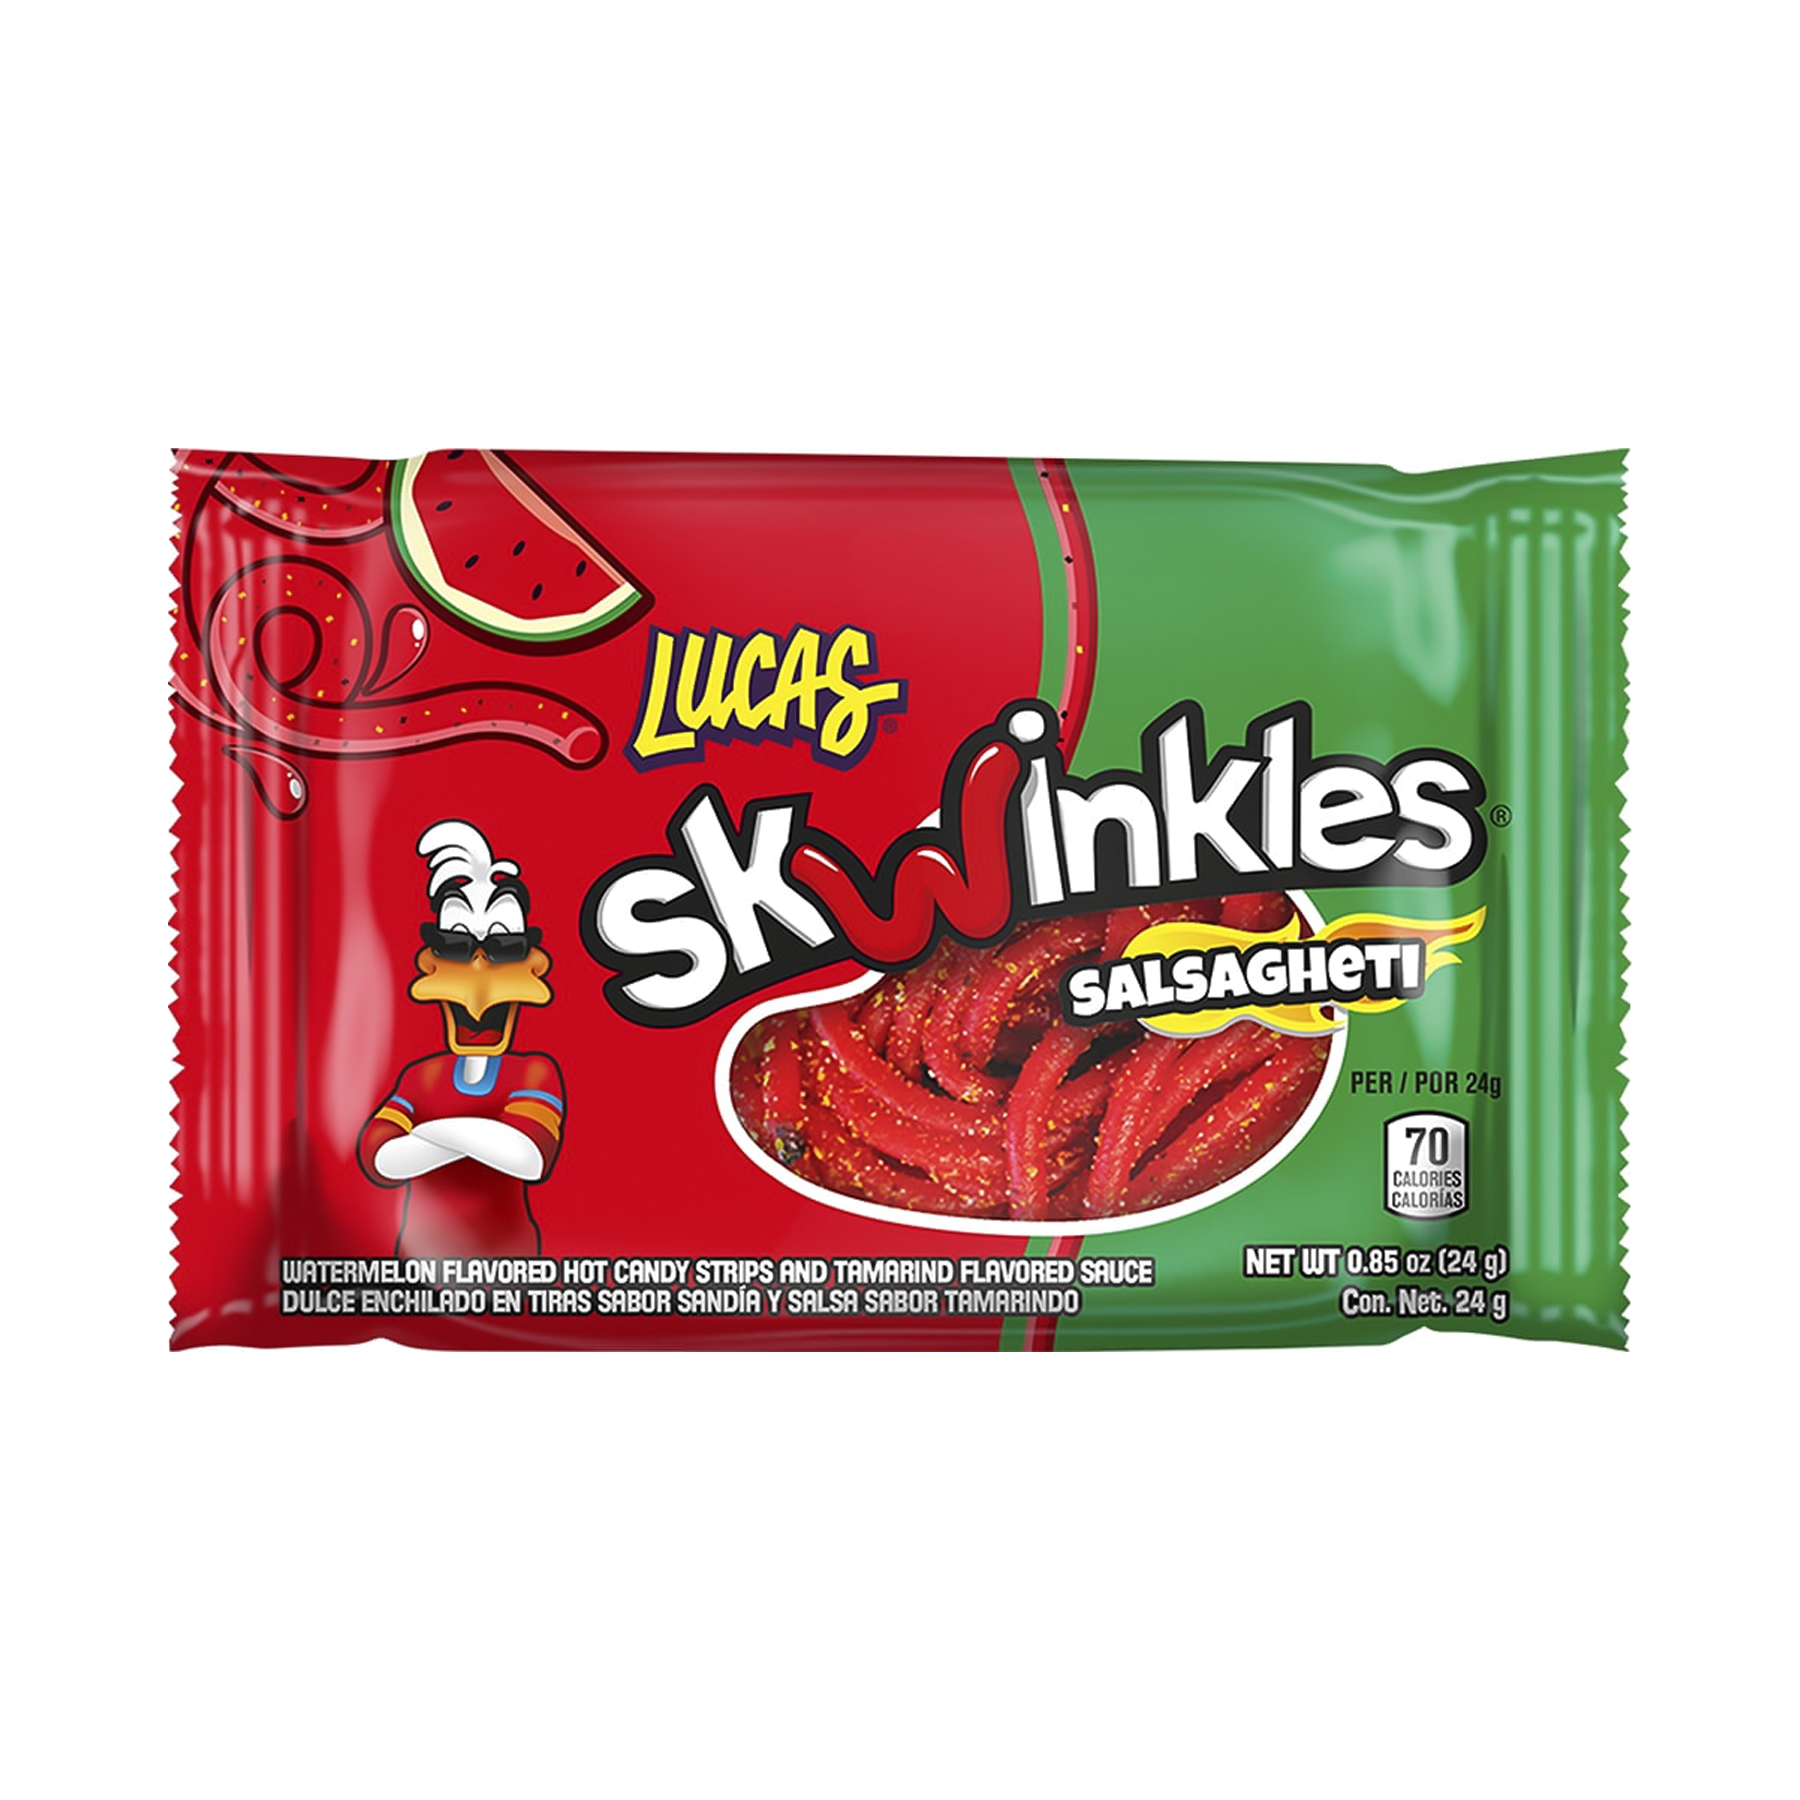 Lucas Skwinkles Salsagheti Watermelon (0.85 Oz)